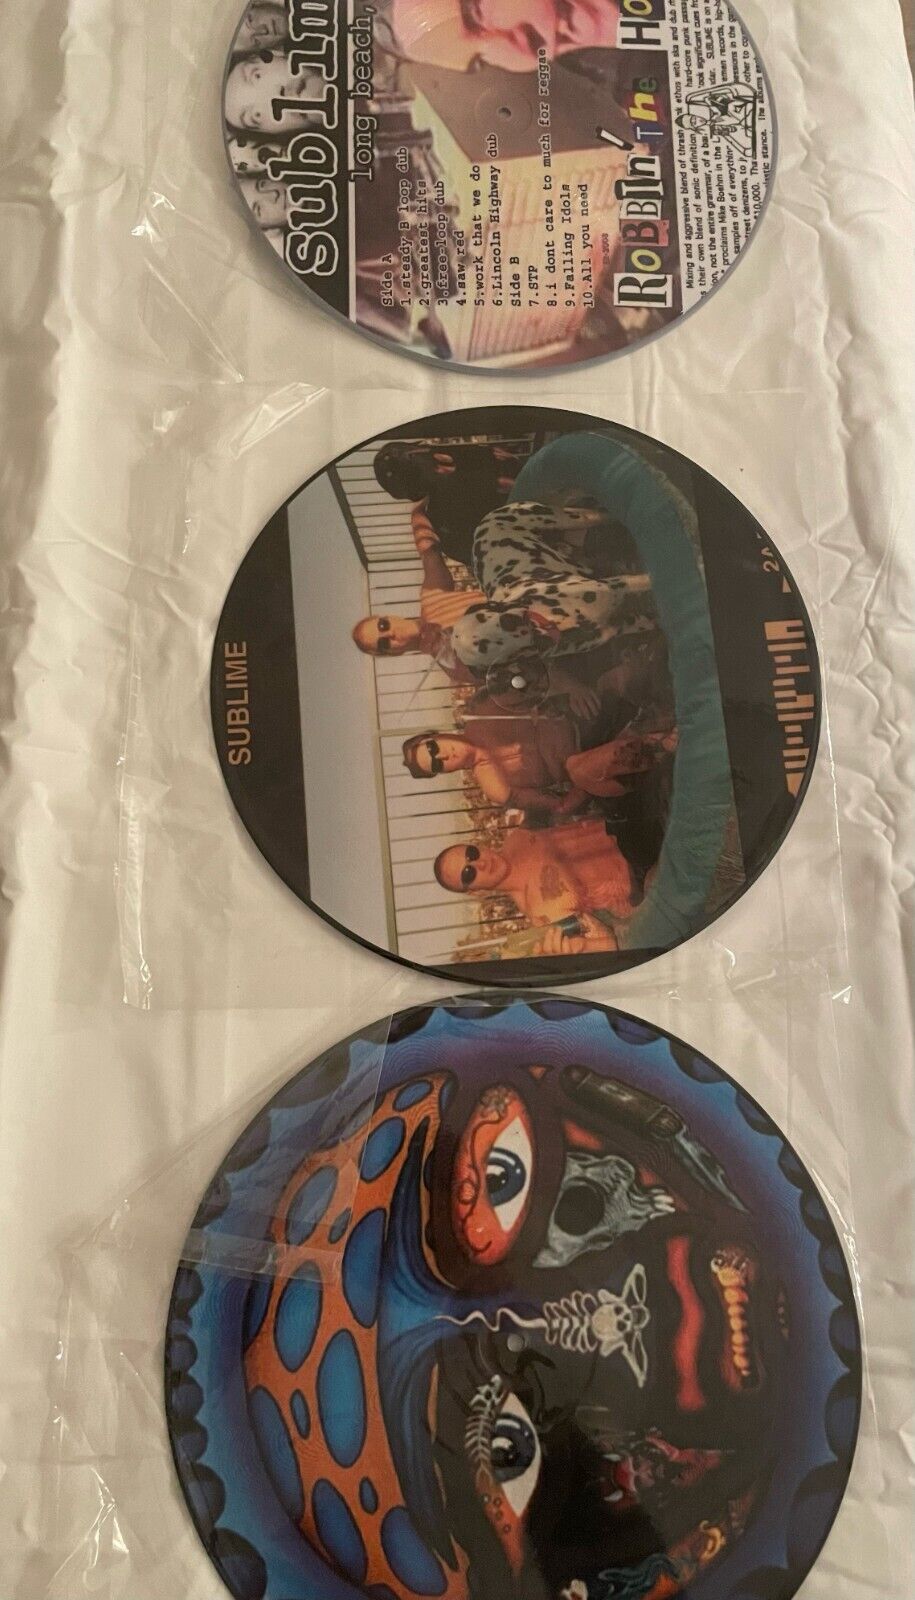 Lot of 3 Sublime Picture disk Vinyls